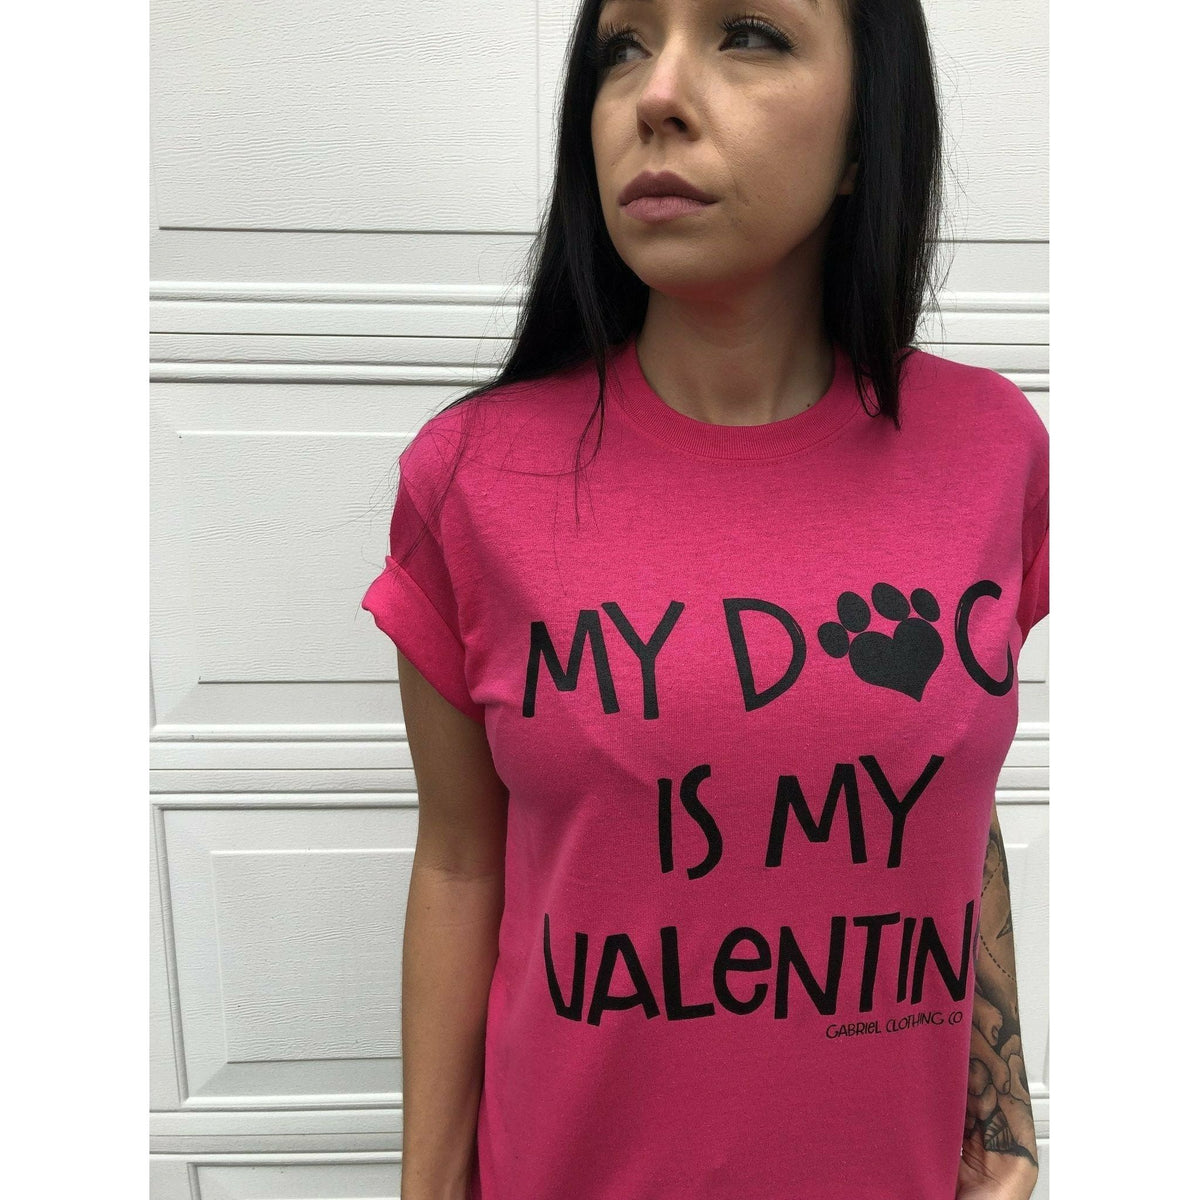 My Dog is my Valentine Tee or sweatshirt